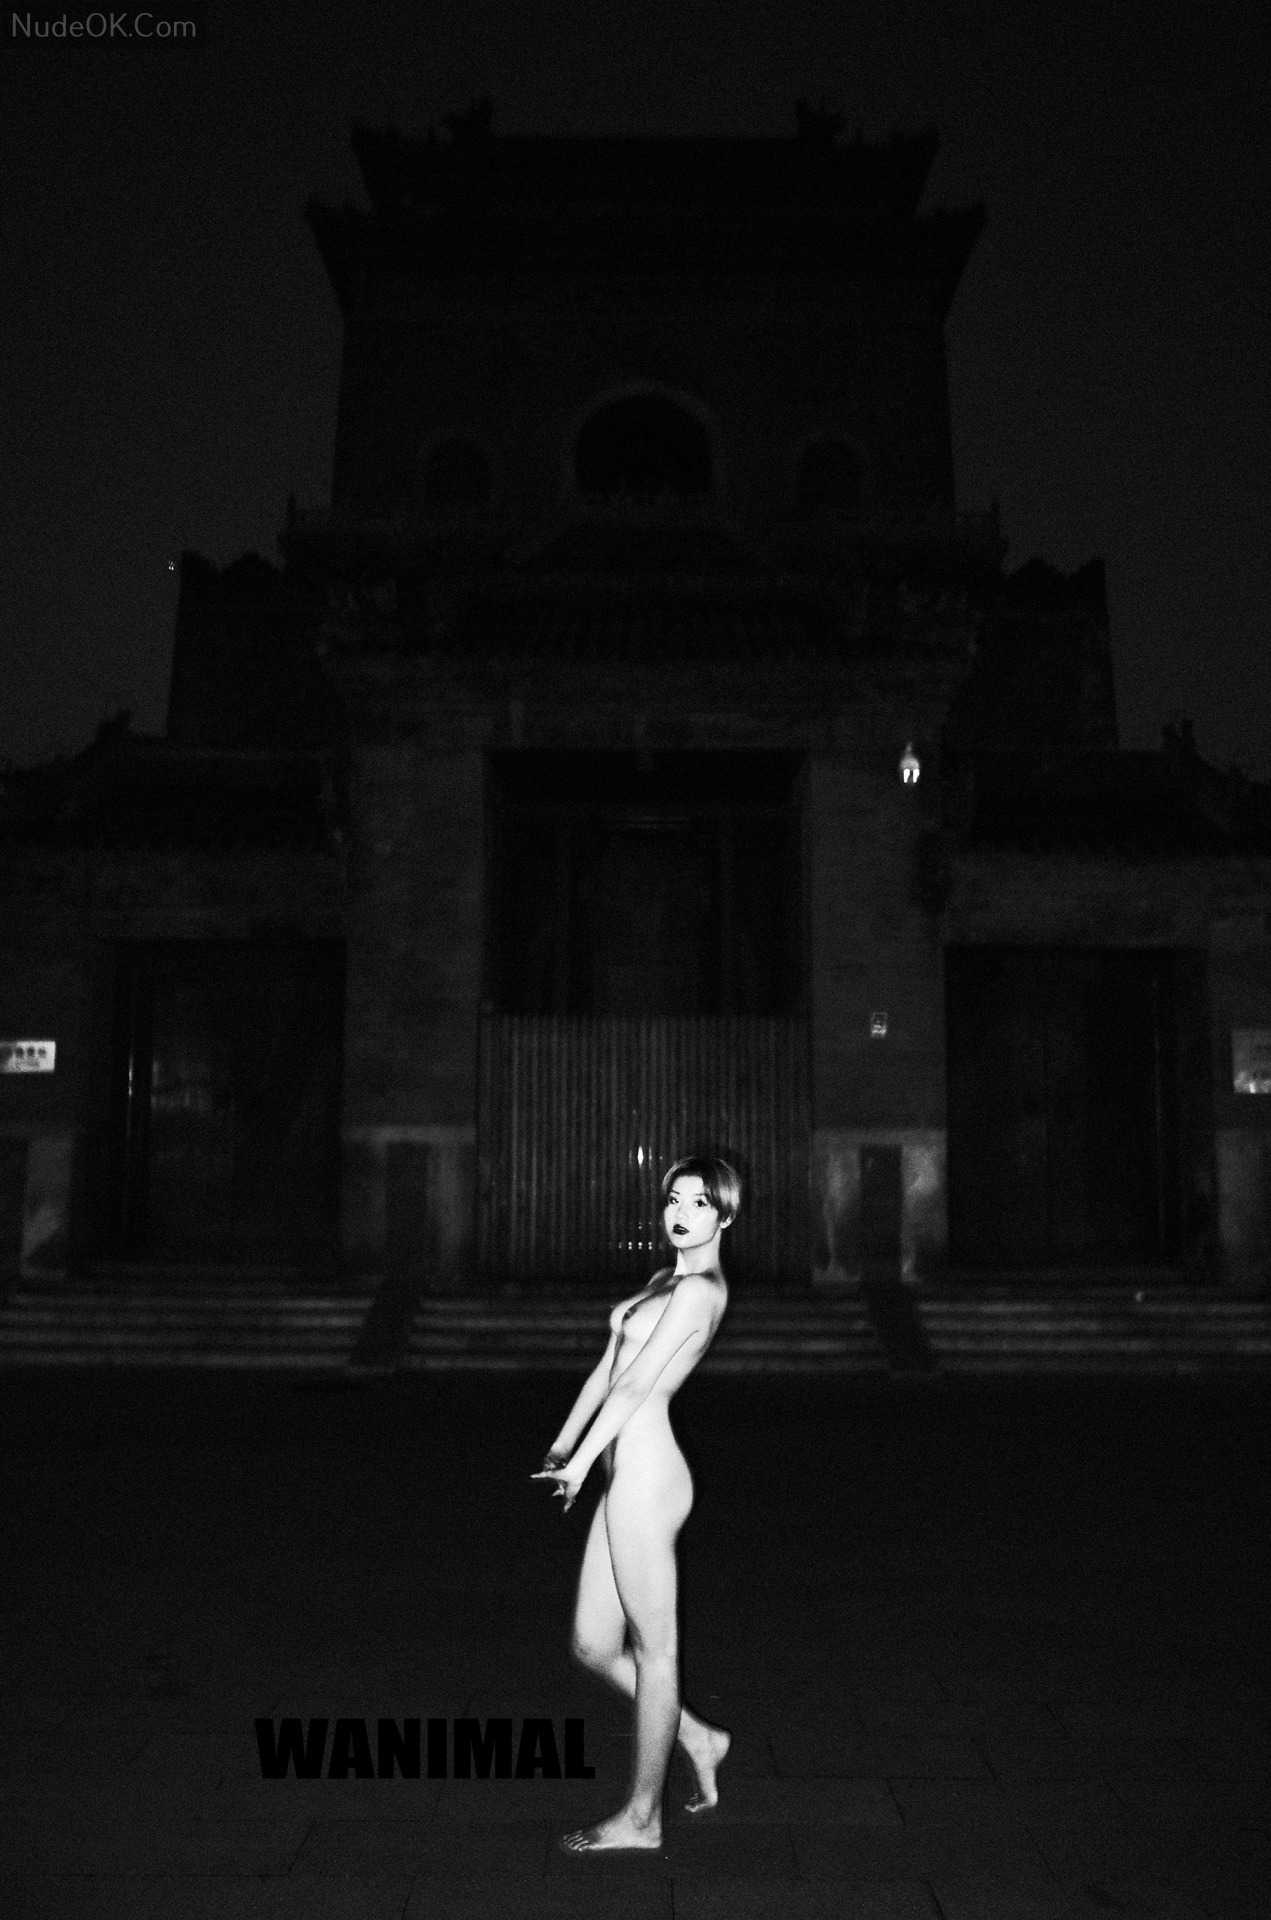 NudeOK.Com - Nacktfotos des chinesischen Models - Wanimaler Akt - Erotik - Aktkunst NudeOK.Com Wanimal Photo Album; Model China; Girl Chinese; Naked Sexy; Nude Pictures; 